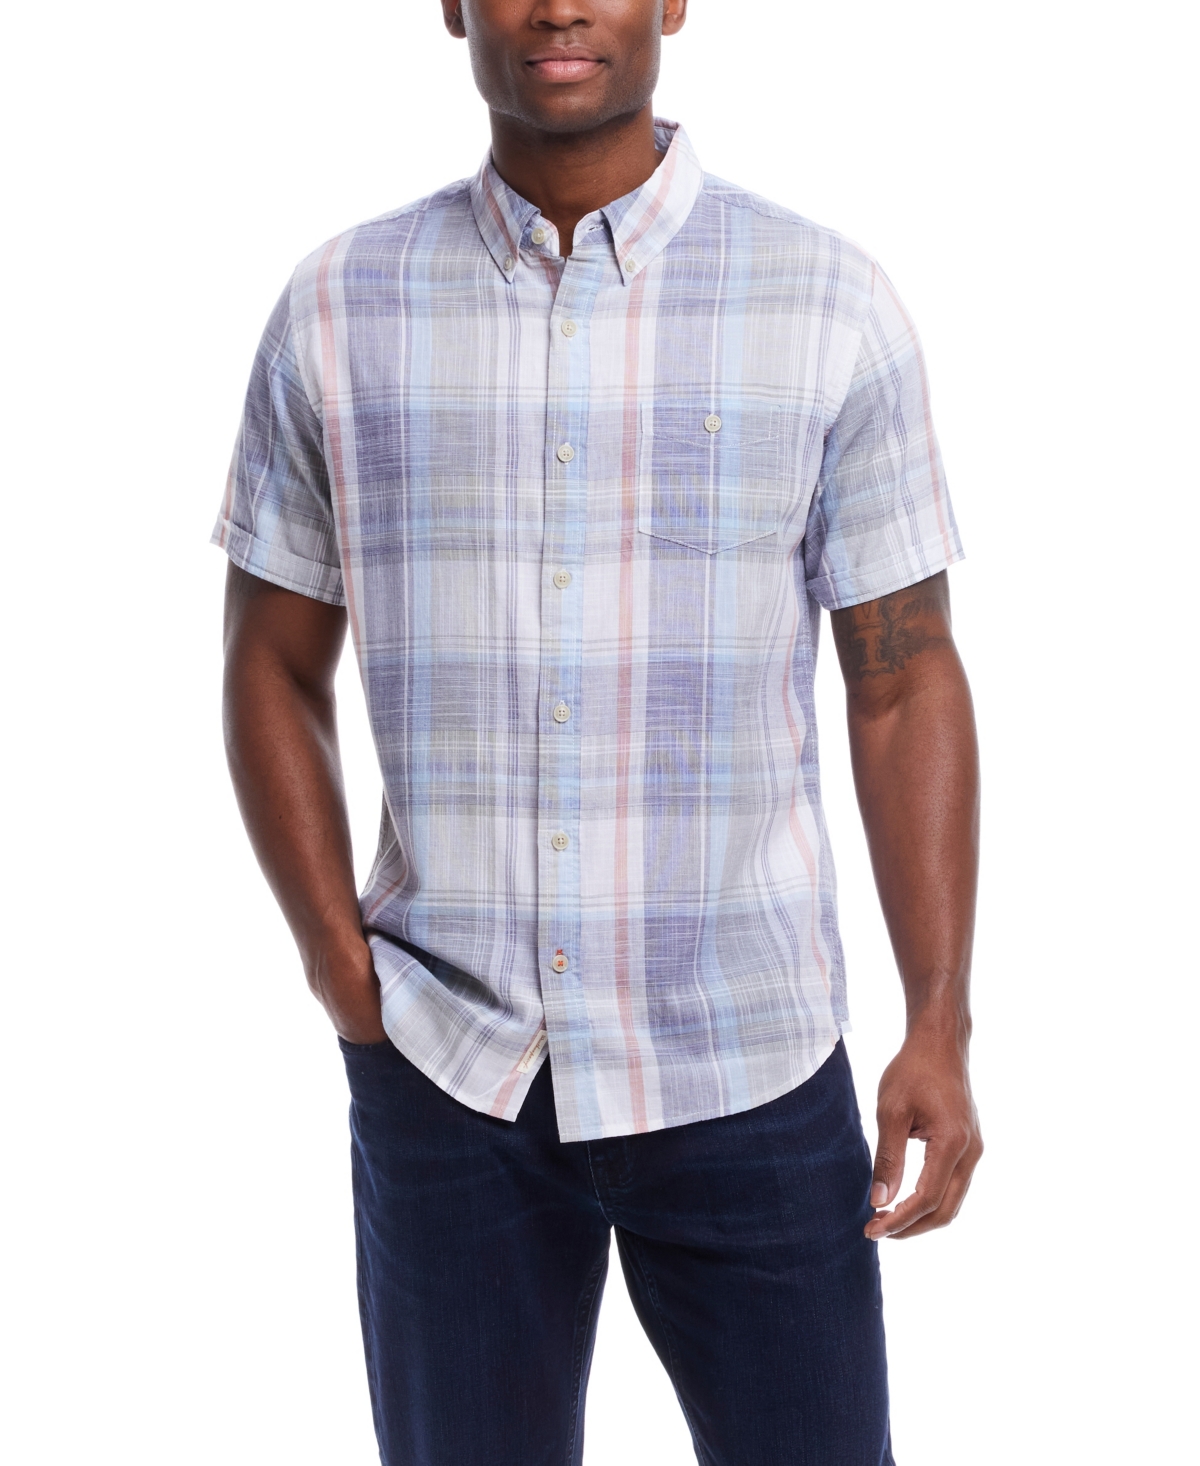 Men's Short Sleeve Plaid Shirt - Four Leaf Clove